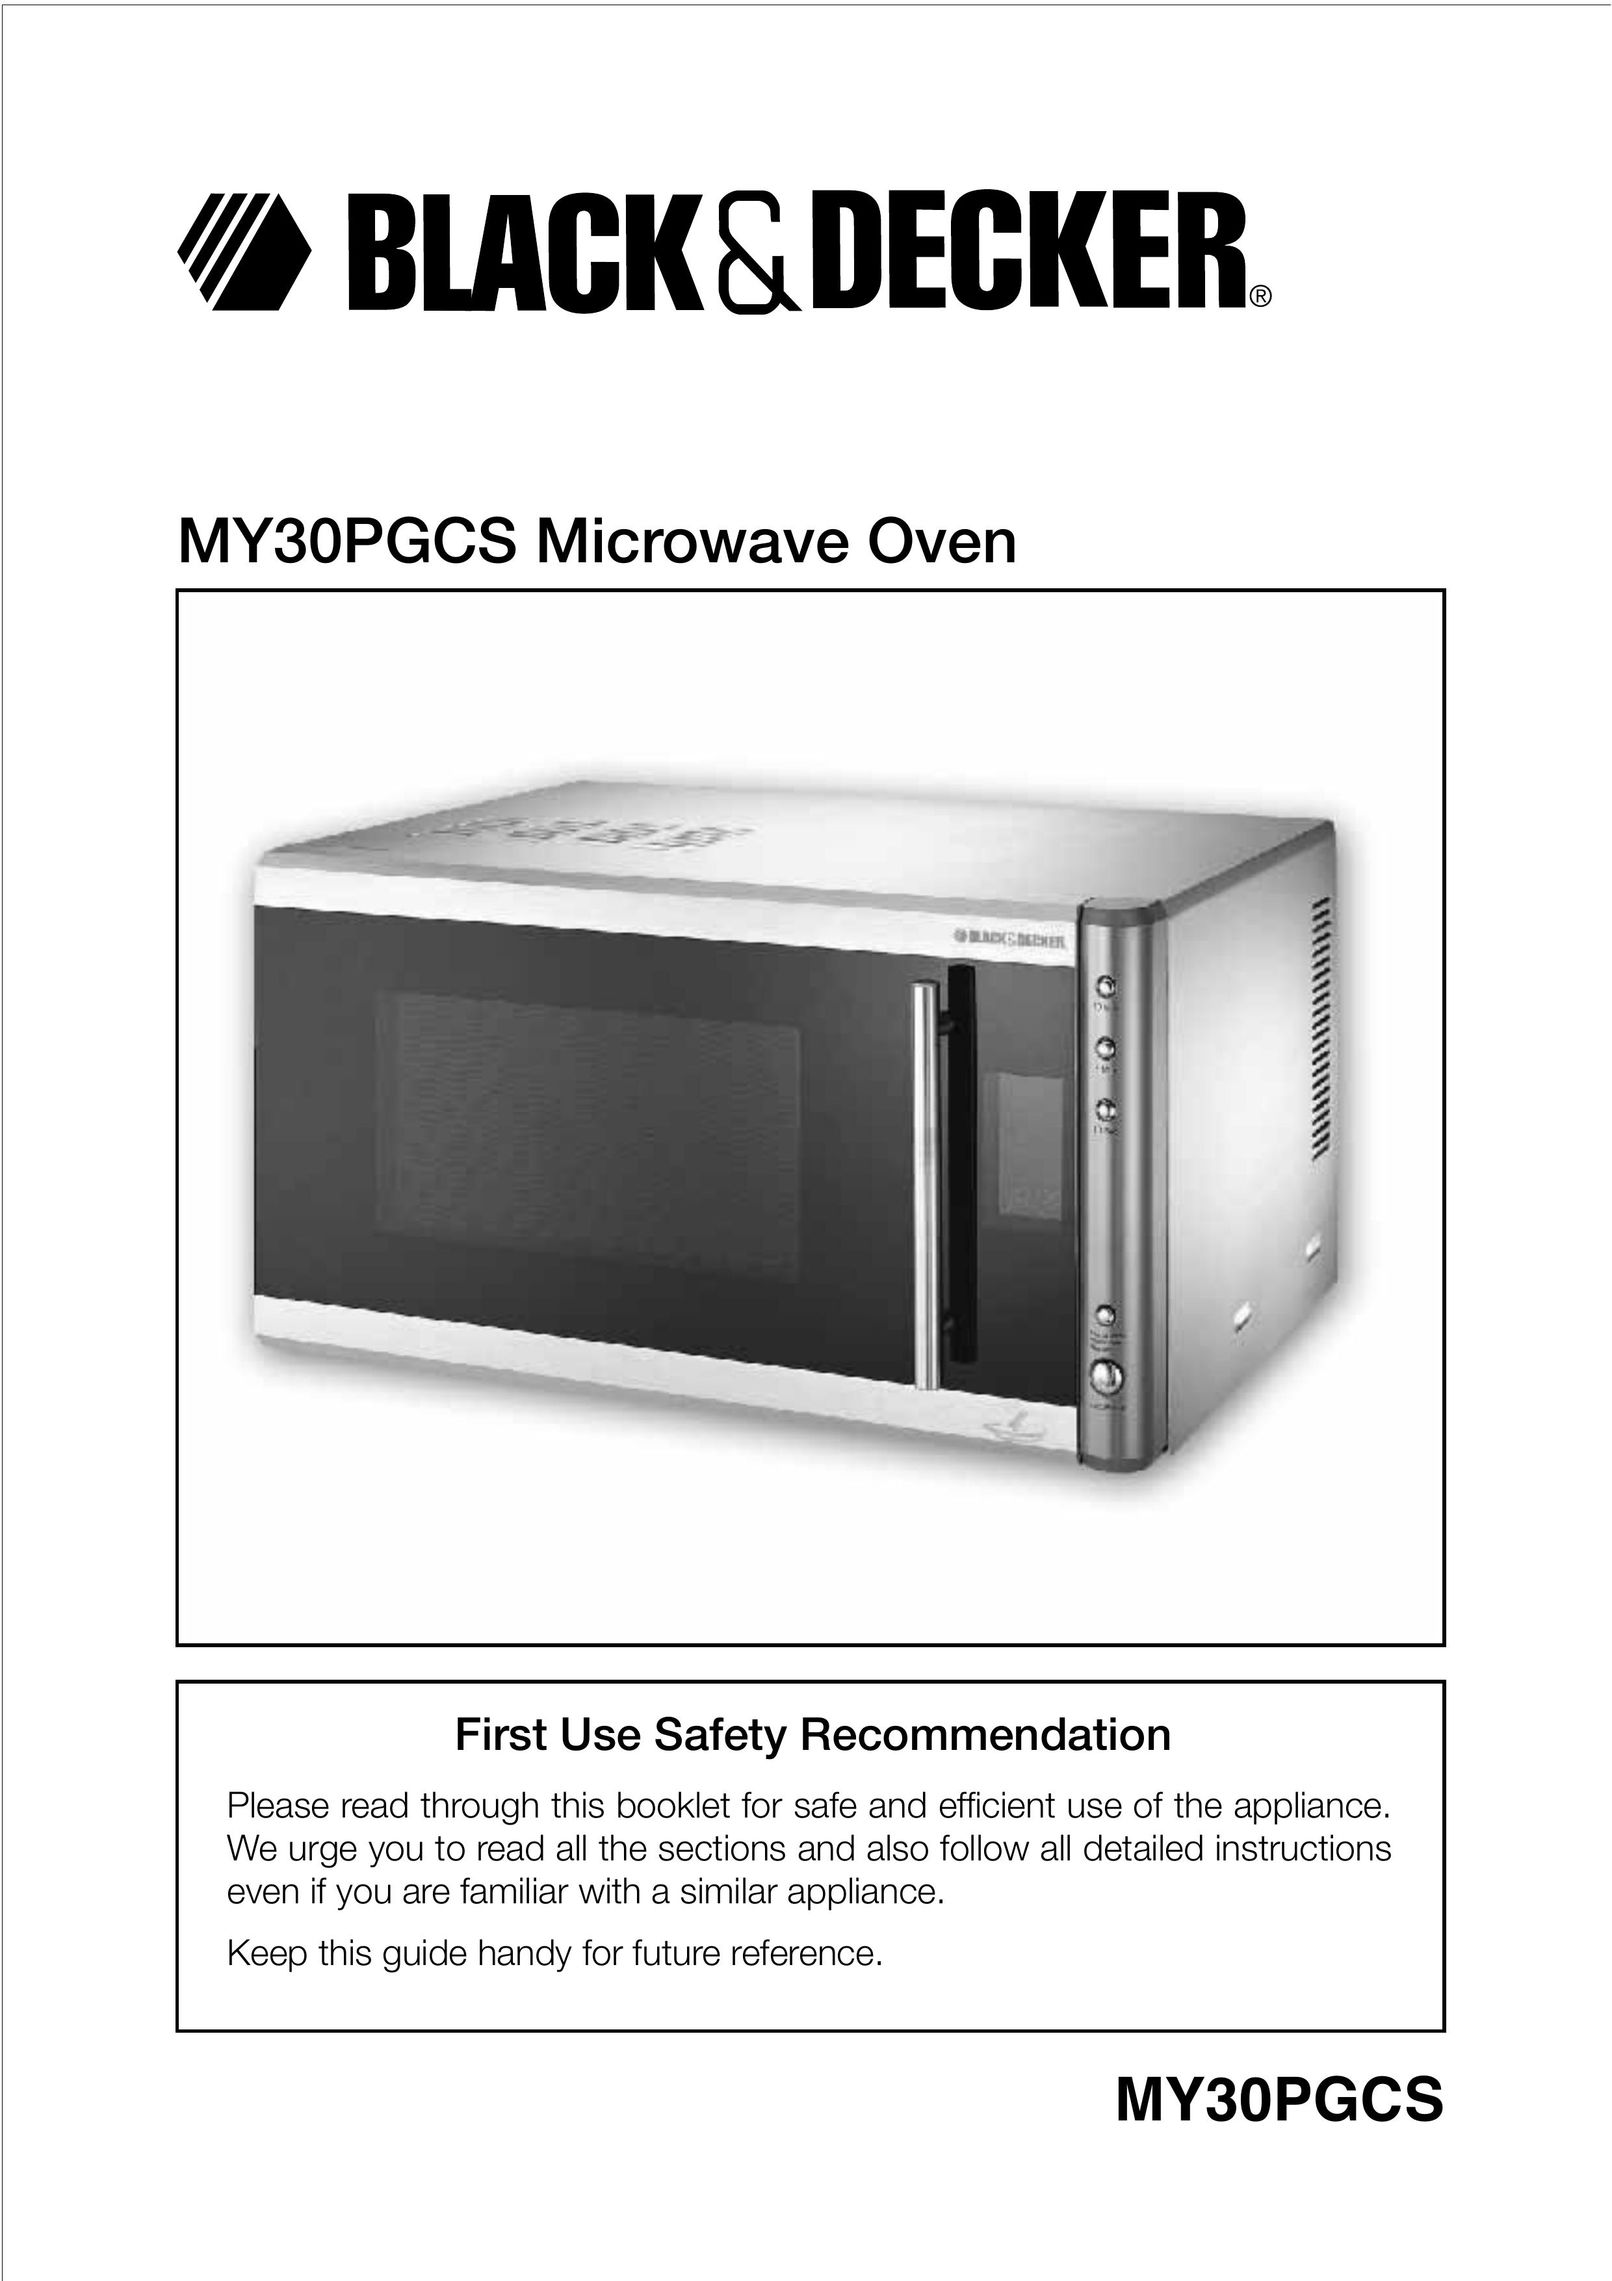 Black & Decker MY30PGCS Microwave Oven User Manual